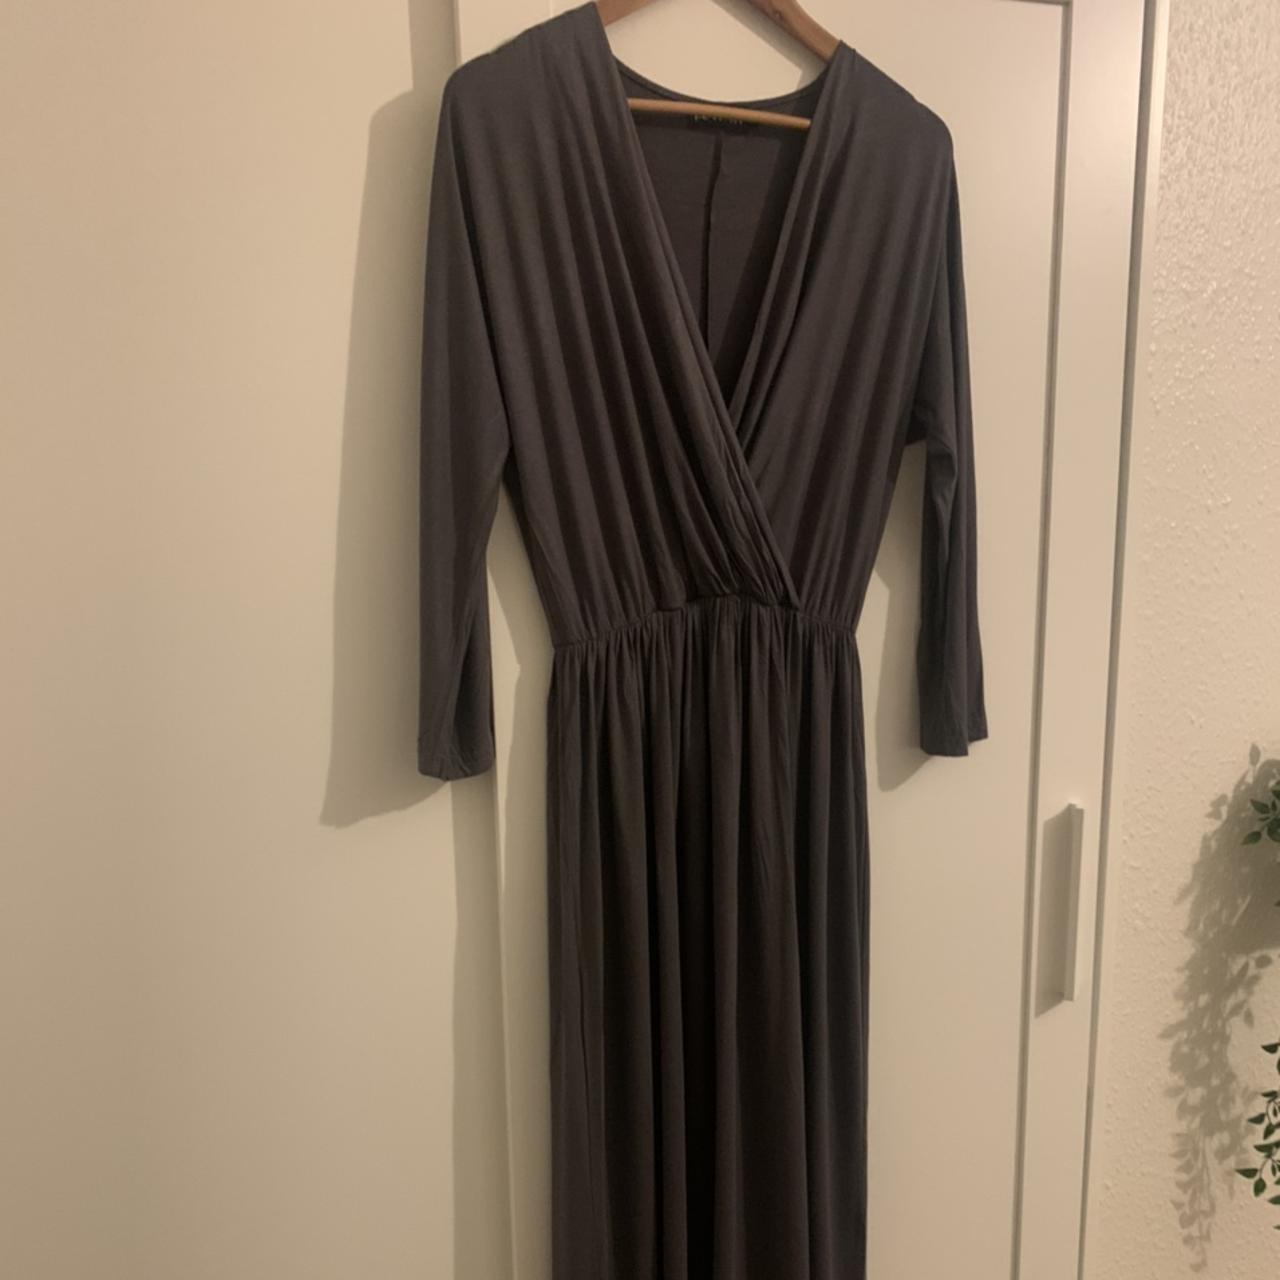 Inayah Charcoal Grey Abaya/dress XS Length 58... - Depop